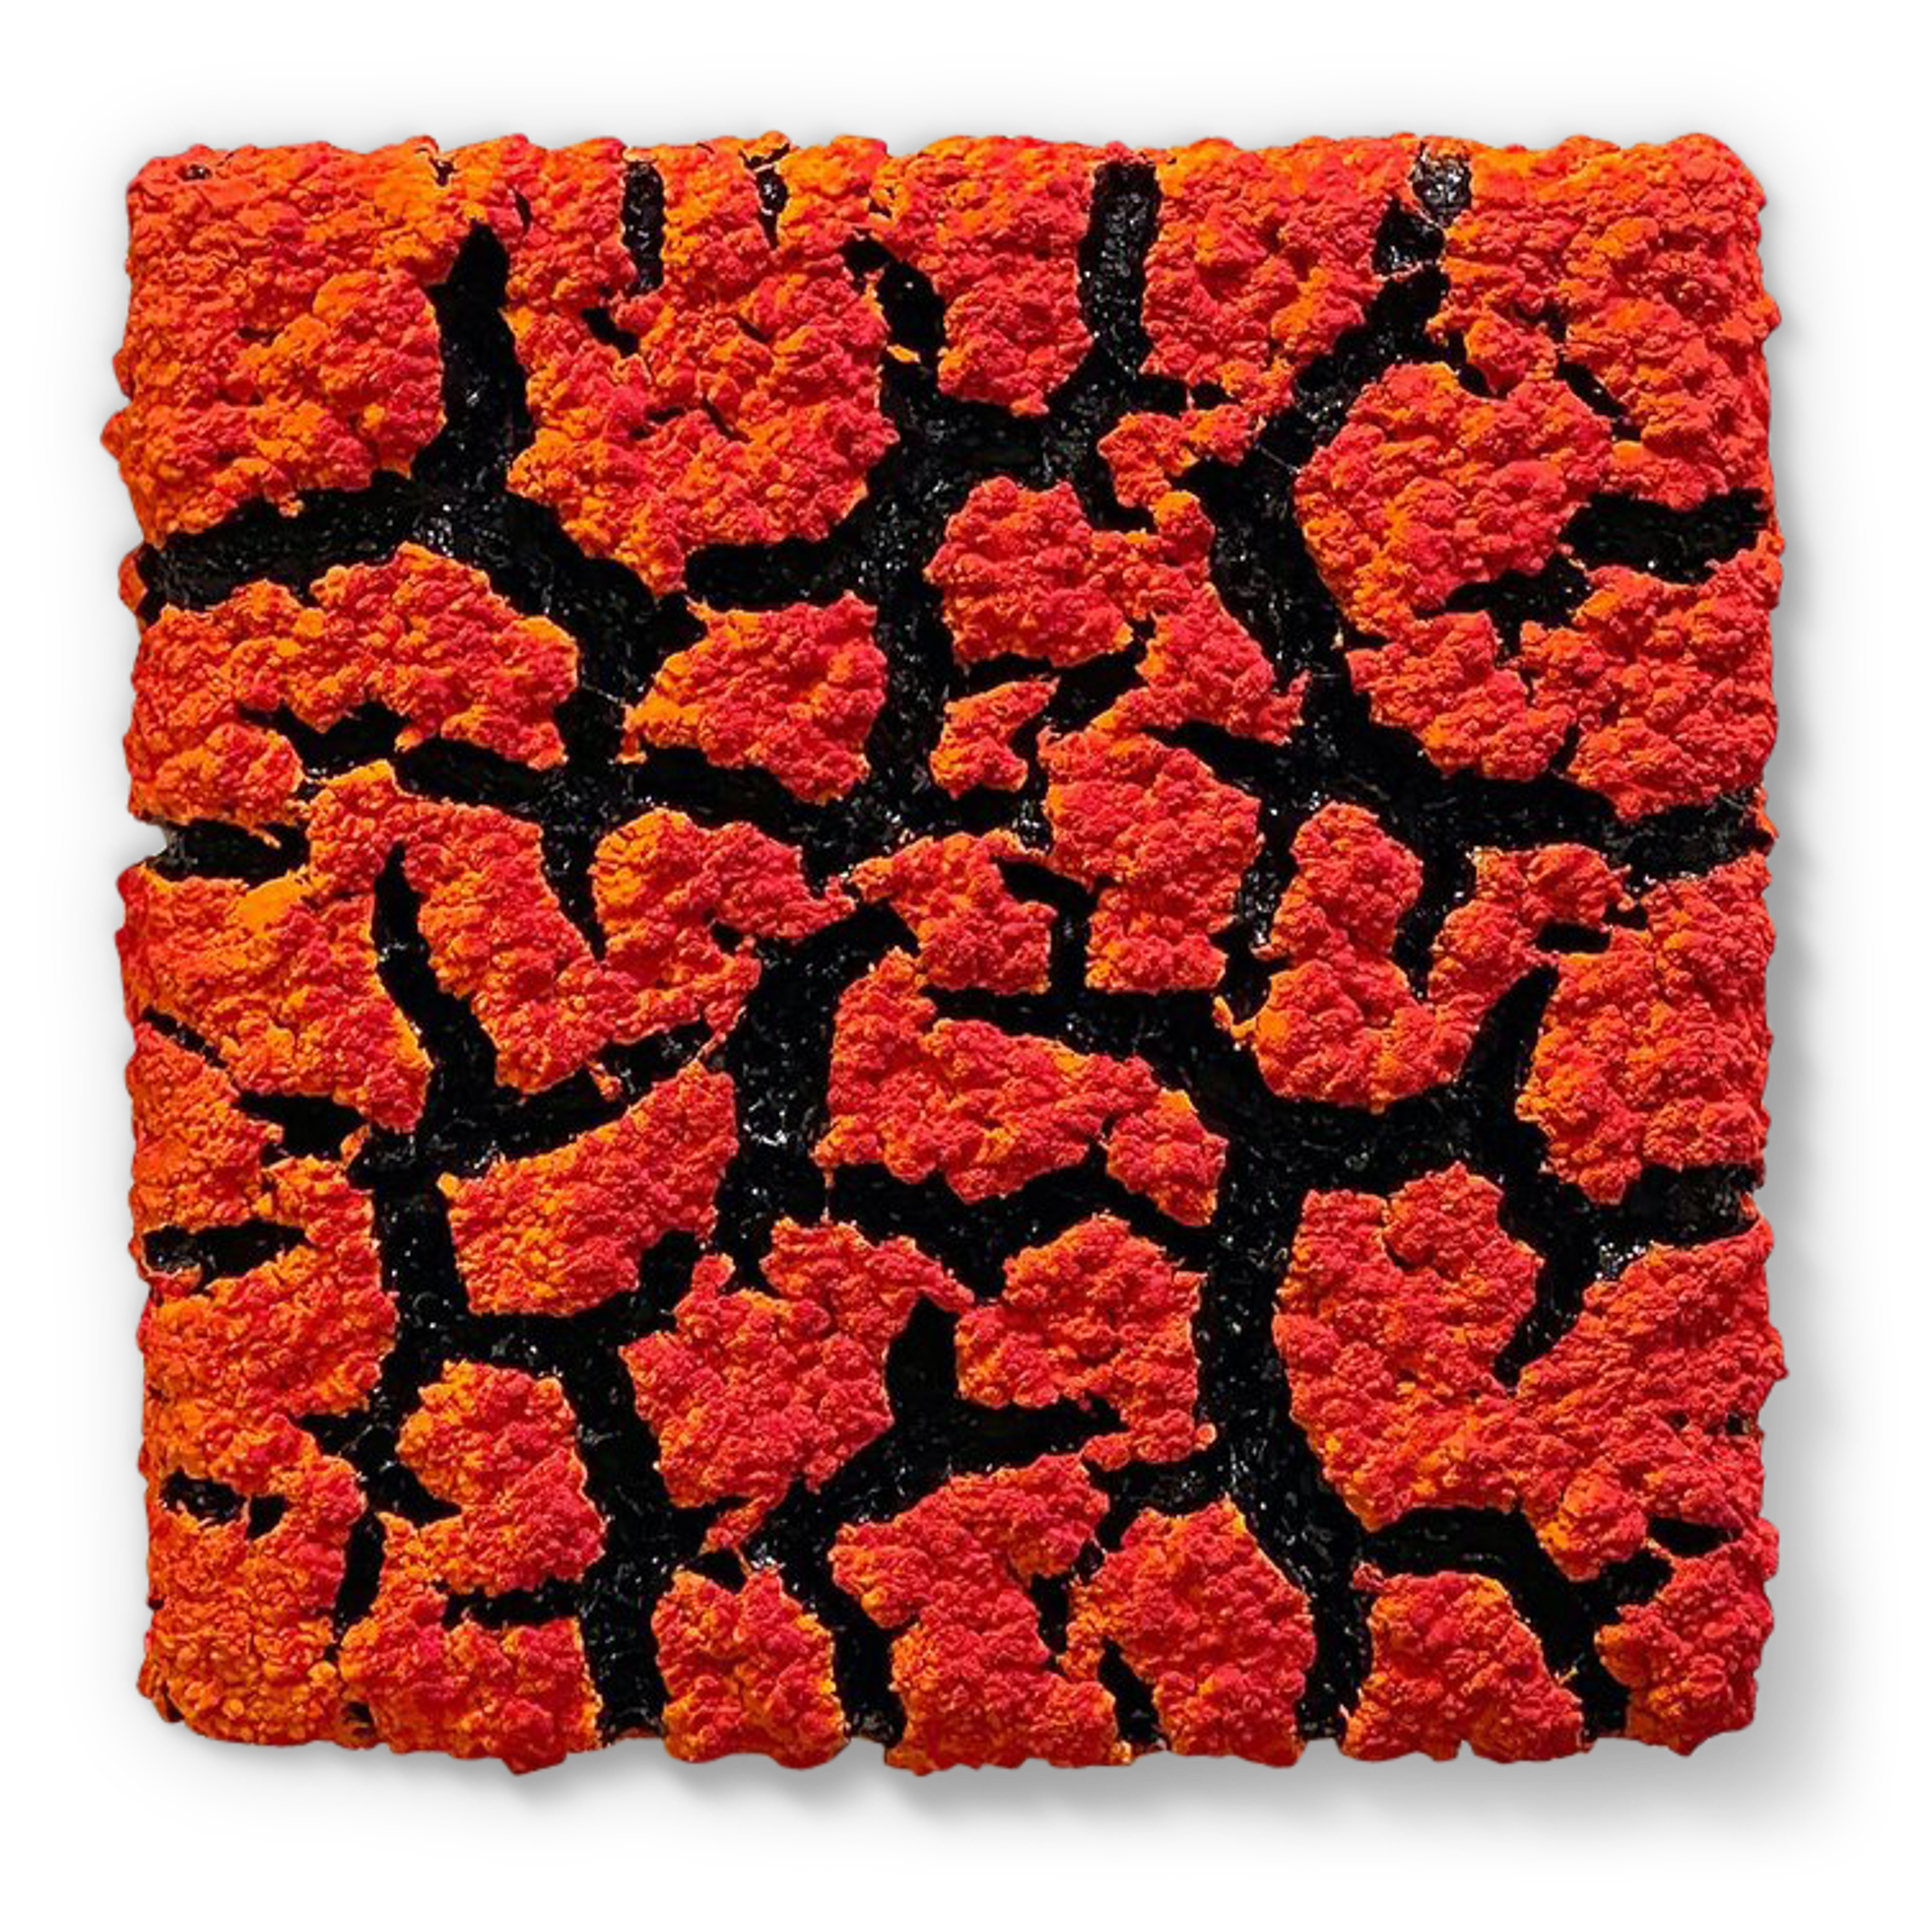 Orange and Red Lichen Wall Piece by Randy O'Brien